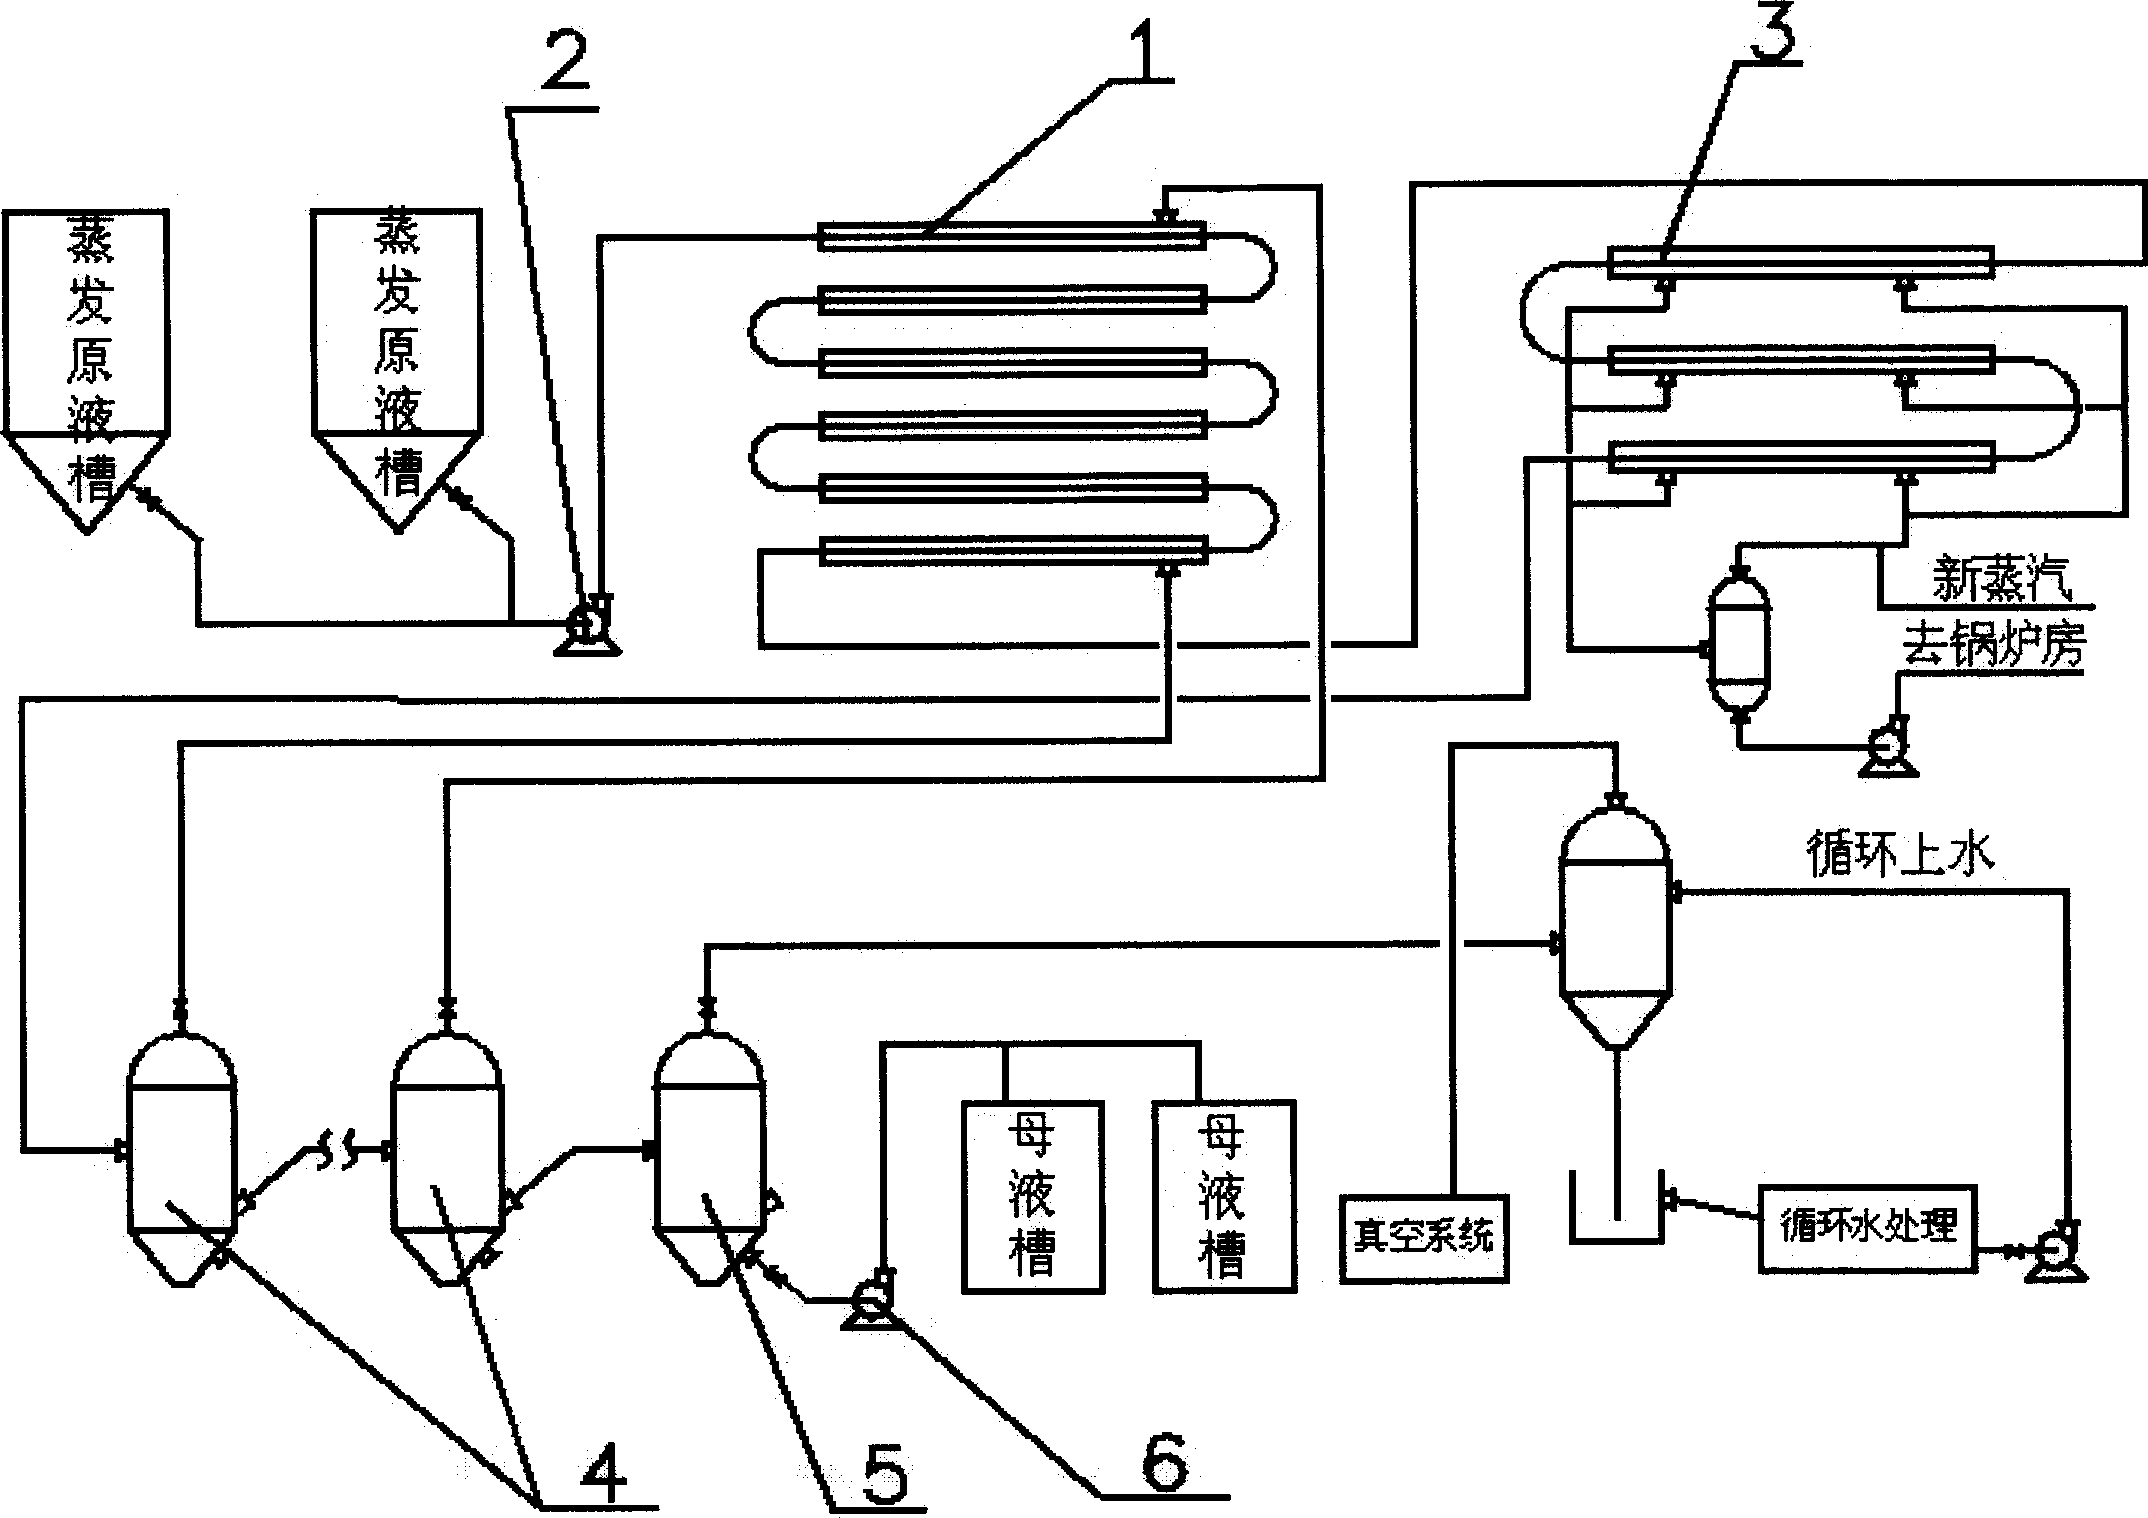 Method and equipment for vaporizing full flash distillation of sodium aluminate liquor in technique for producing alumina